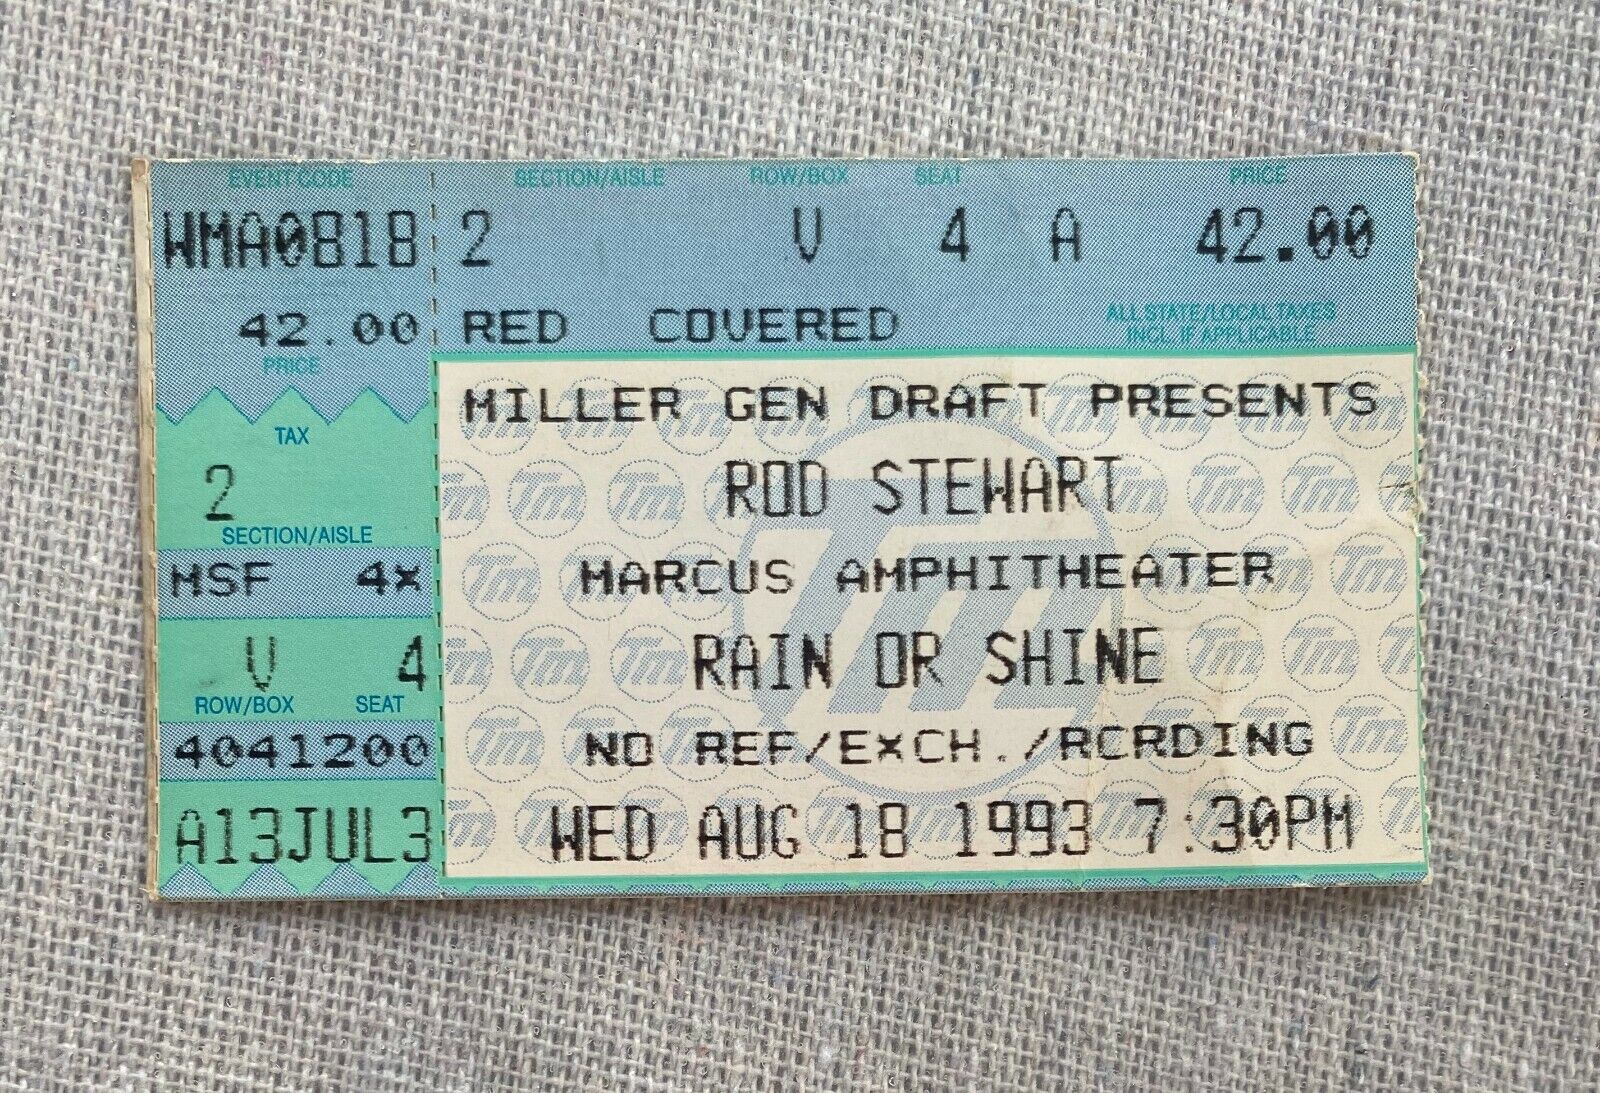 ROD STEWART Concert Ticket Stub 8 1993 Marcus Amphitheatre 18 Max 87% OFF Mi Max 45% OFF